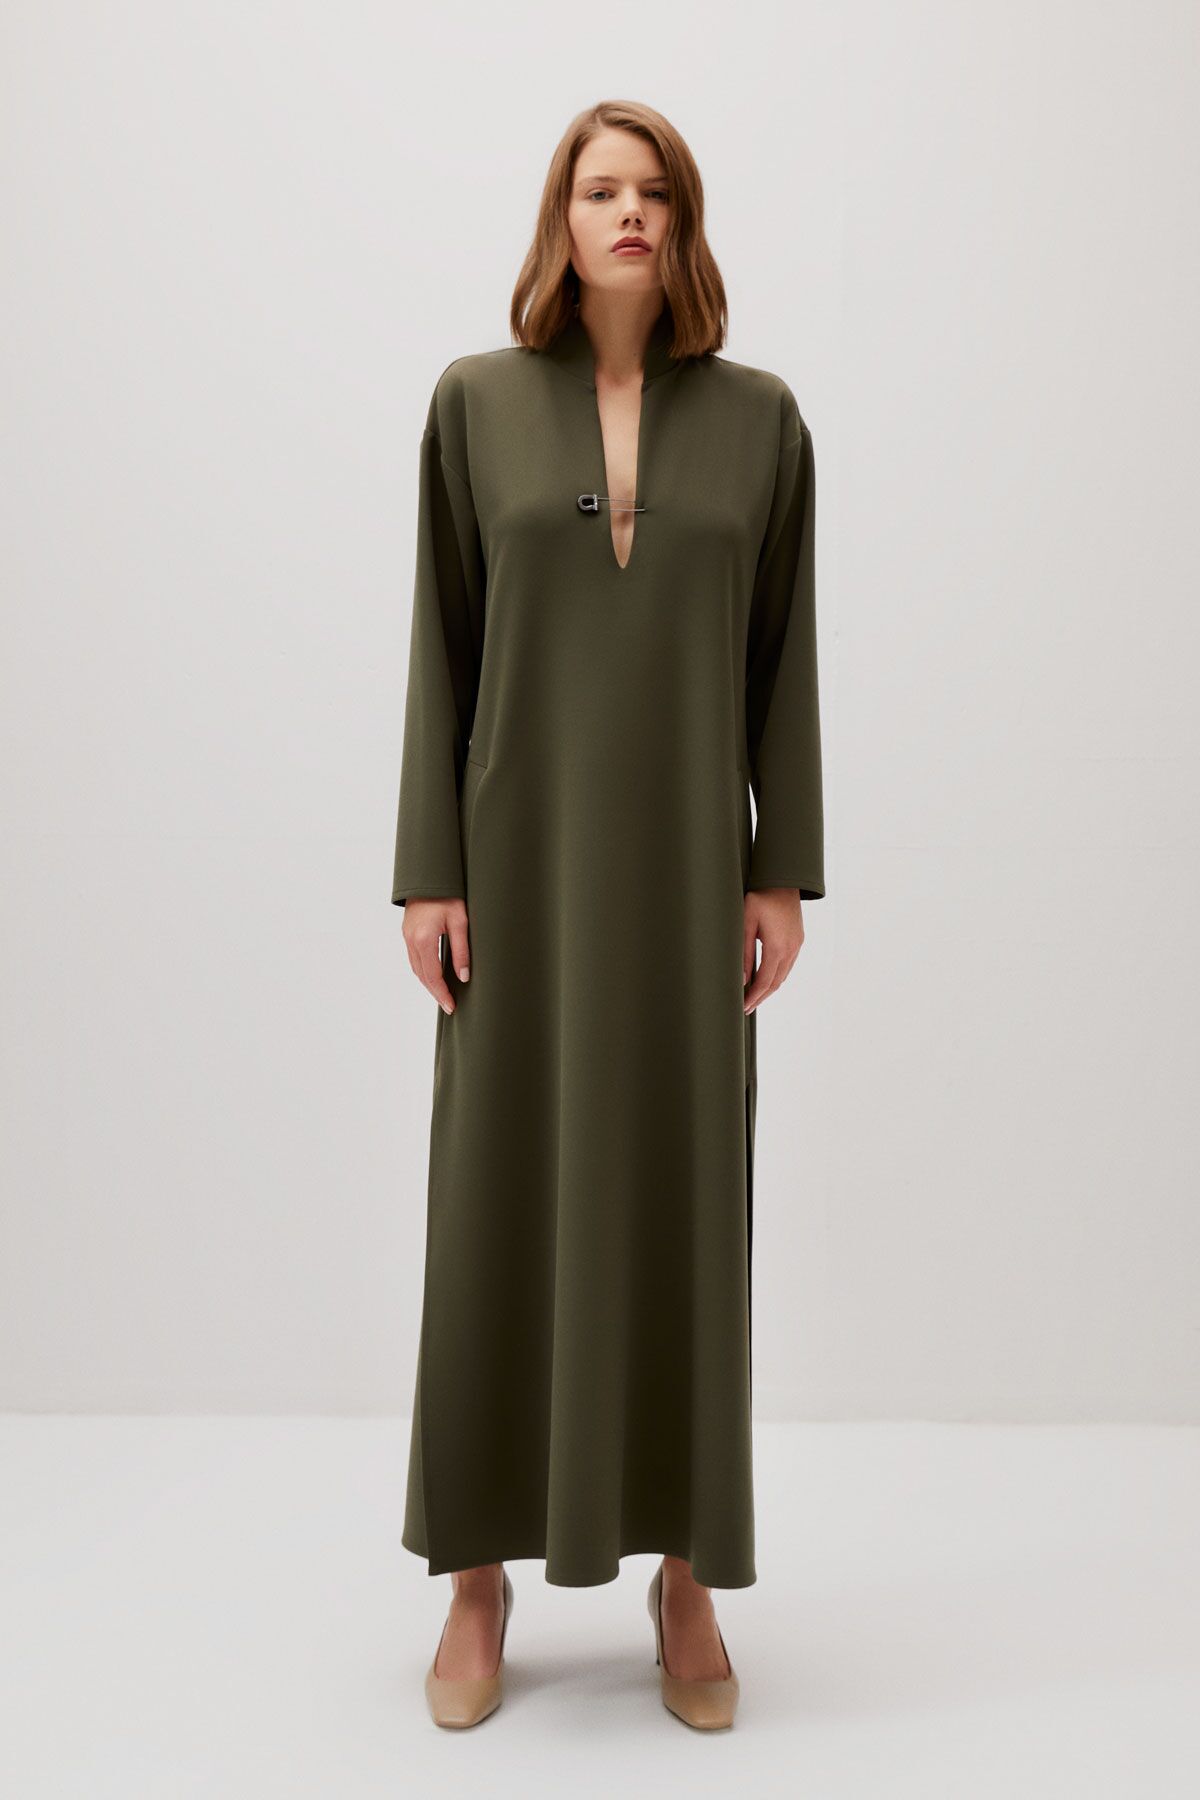 GIZIAGATE - Needle Detailed Slit Green Long Dress